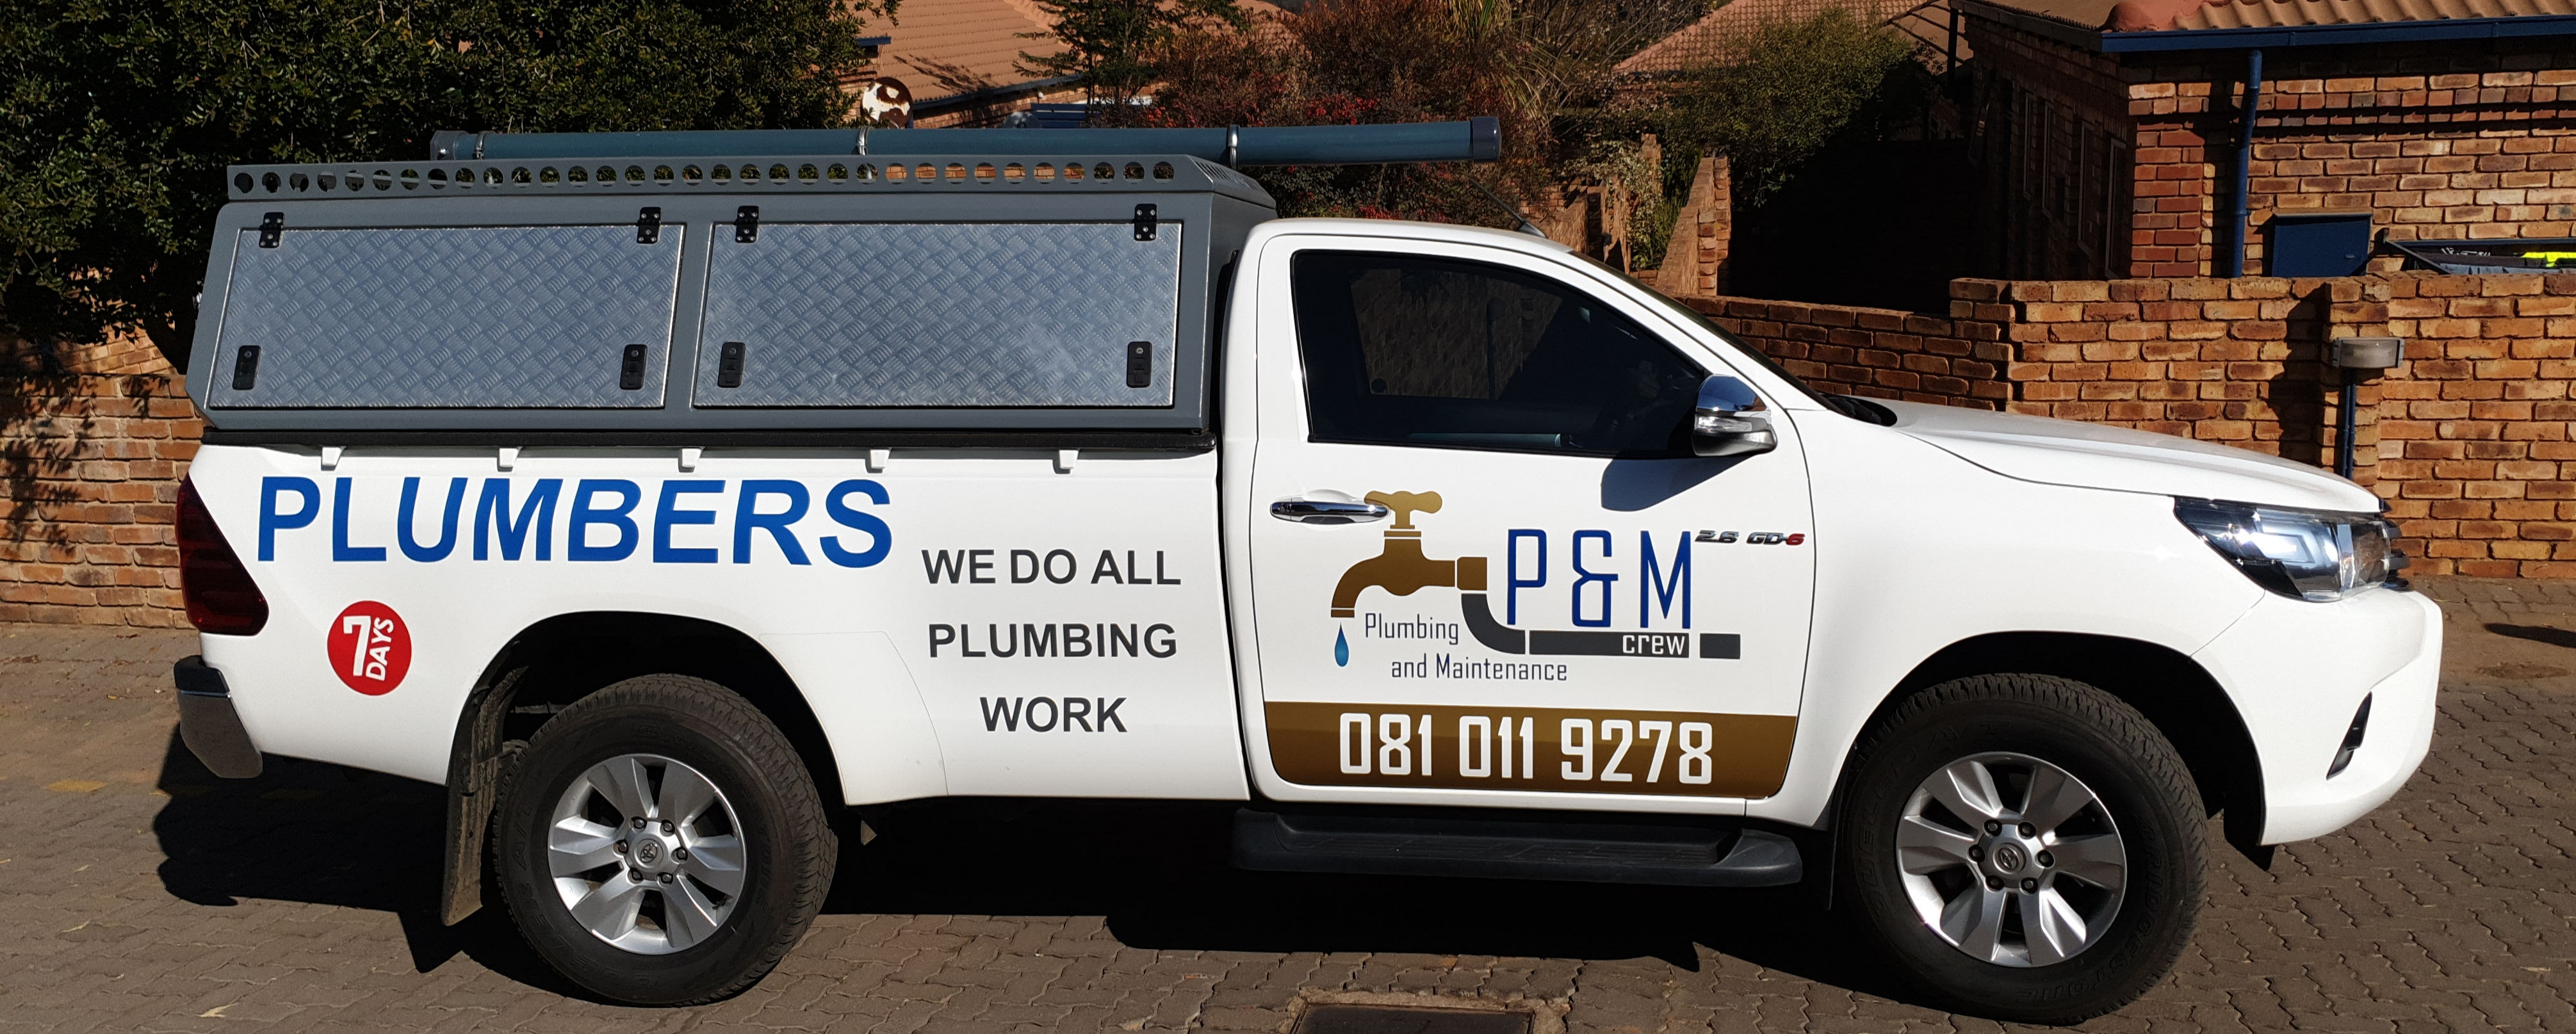 P and M Crew plumbers vehicle 